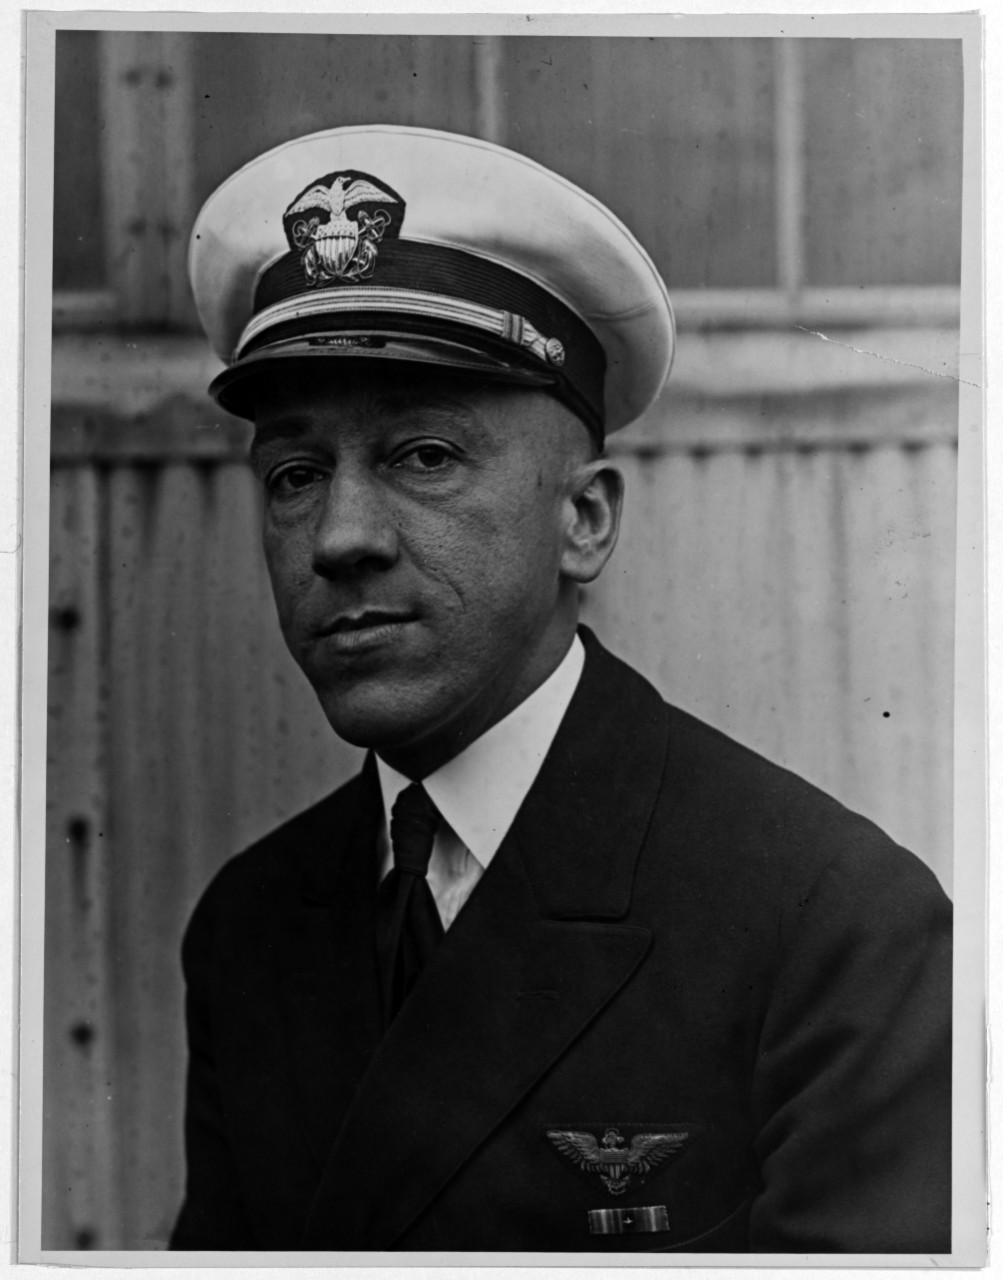 Lieutenant Thomas G. W. Settle, USN